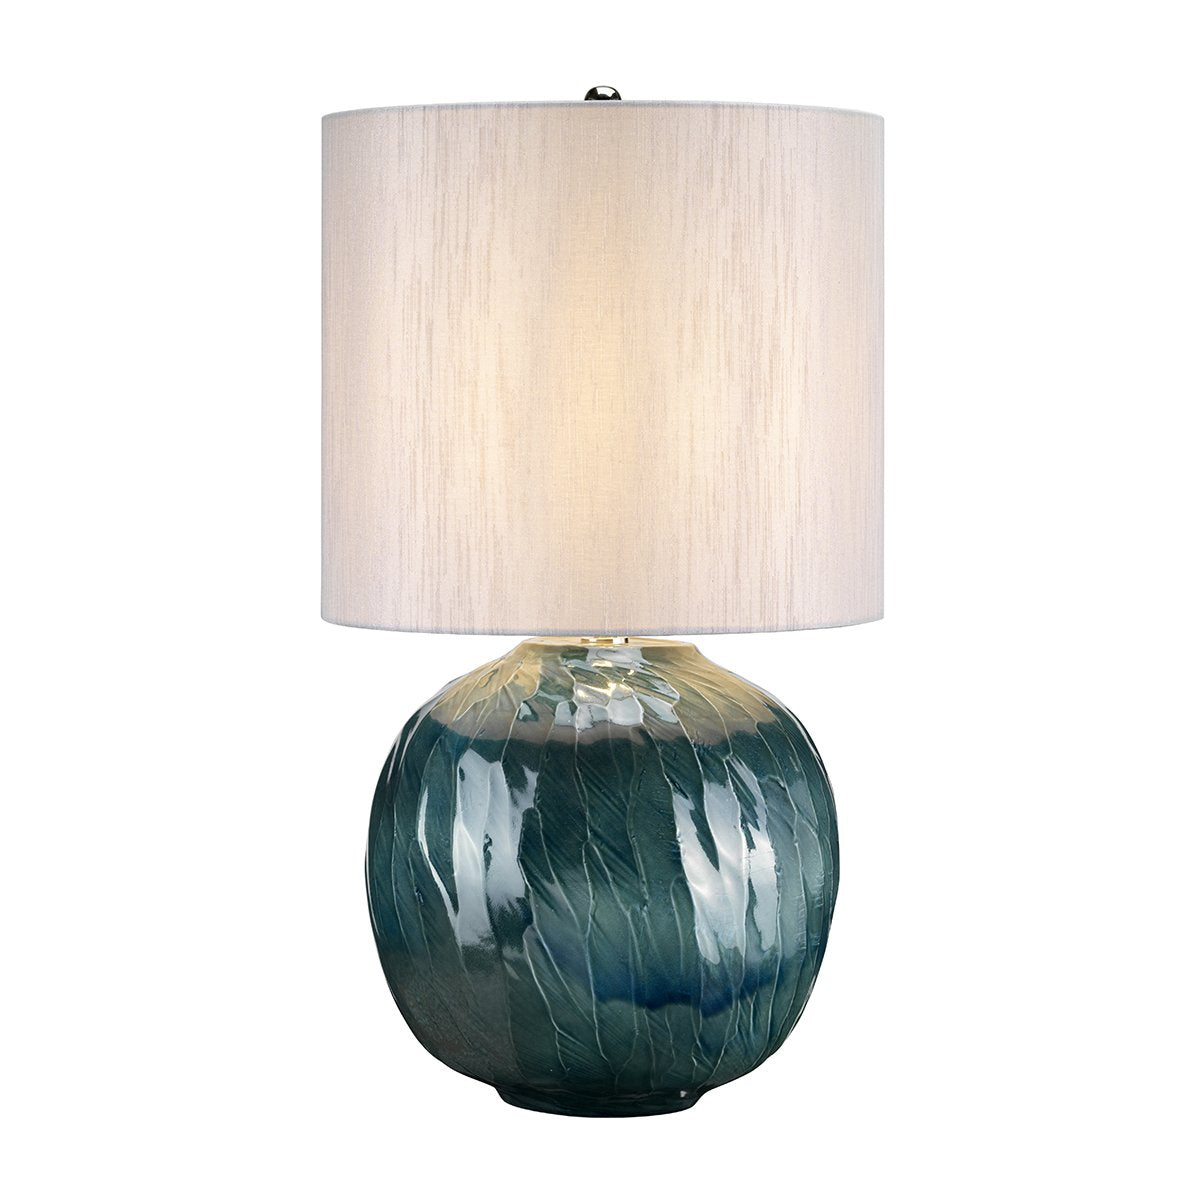 Brixton Globe Blue Table Lamp c/w Shade - ID 8356